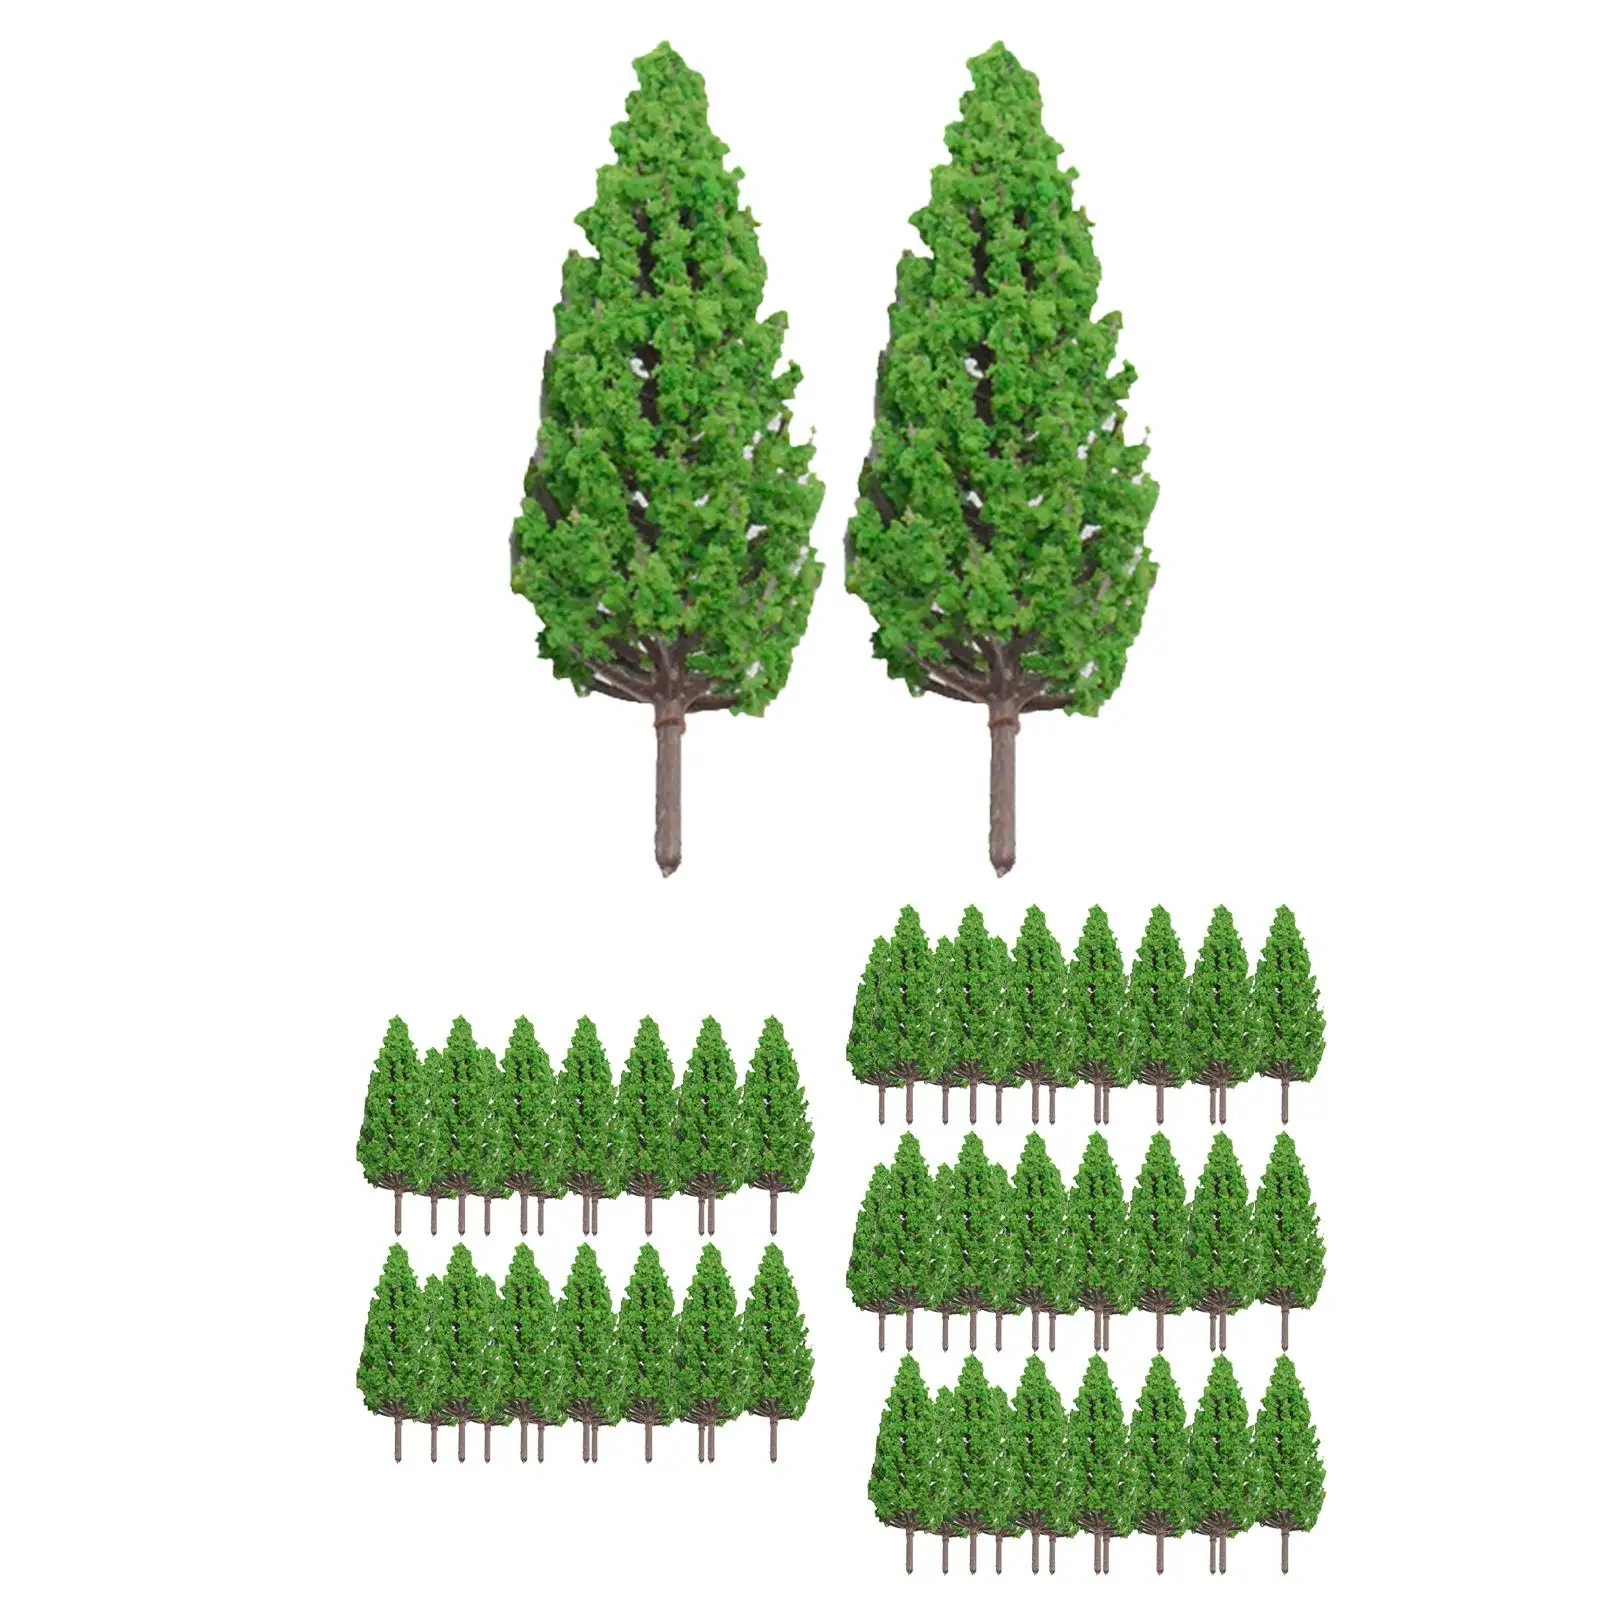 70Pcs Railroad Green Scenery Tree Miniature Tree for Landscape Layout Railway Miniature Scenery DIY Crafts Building Model